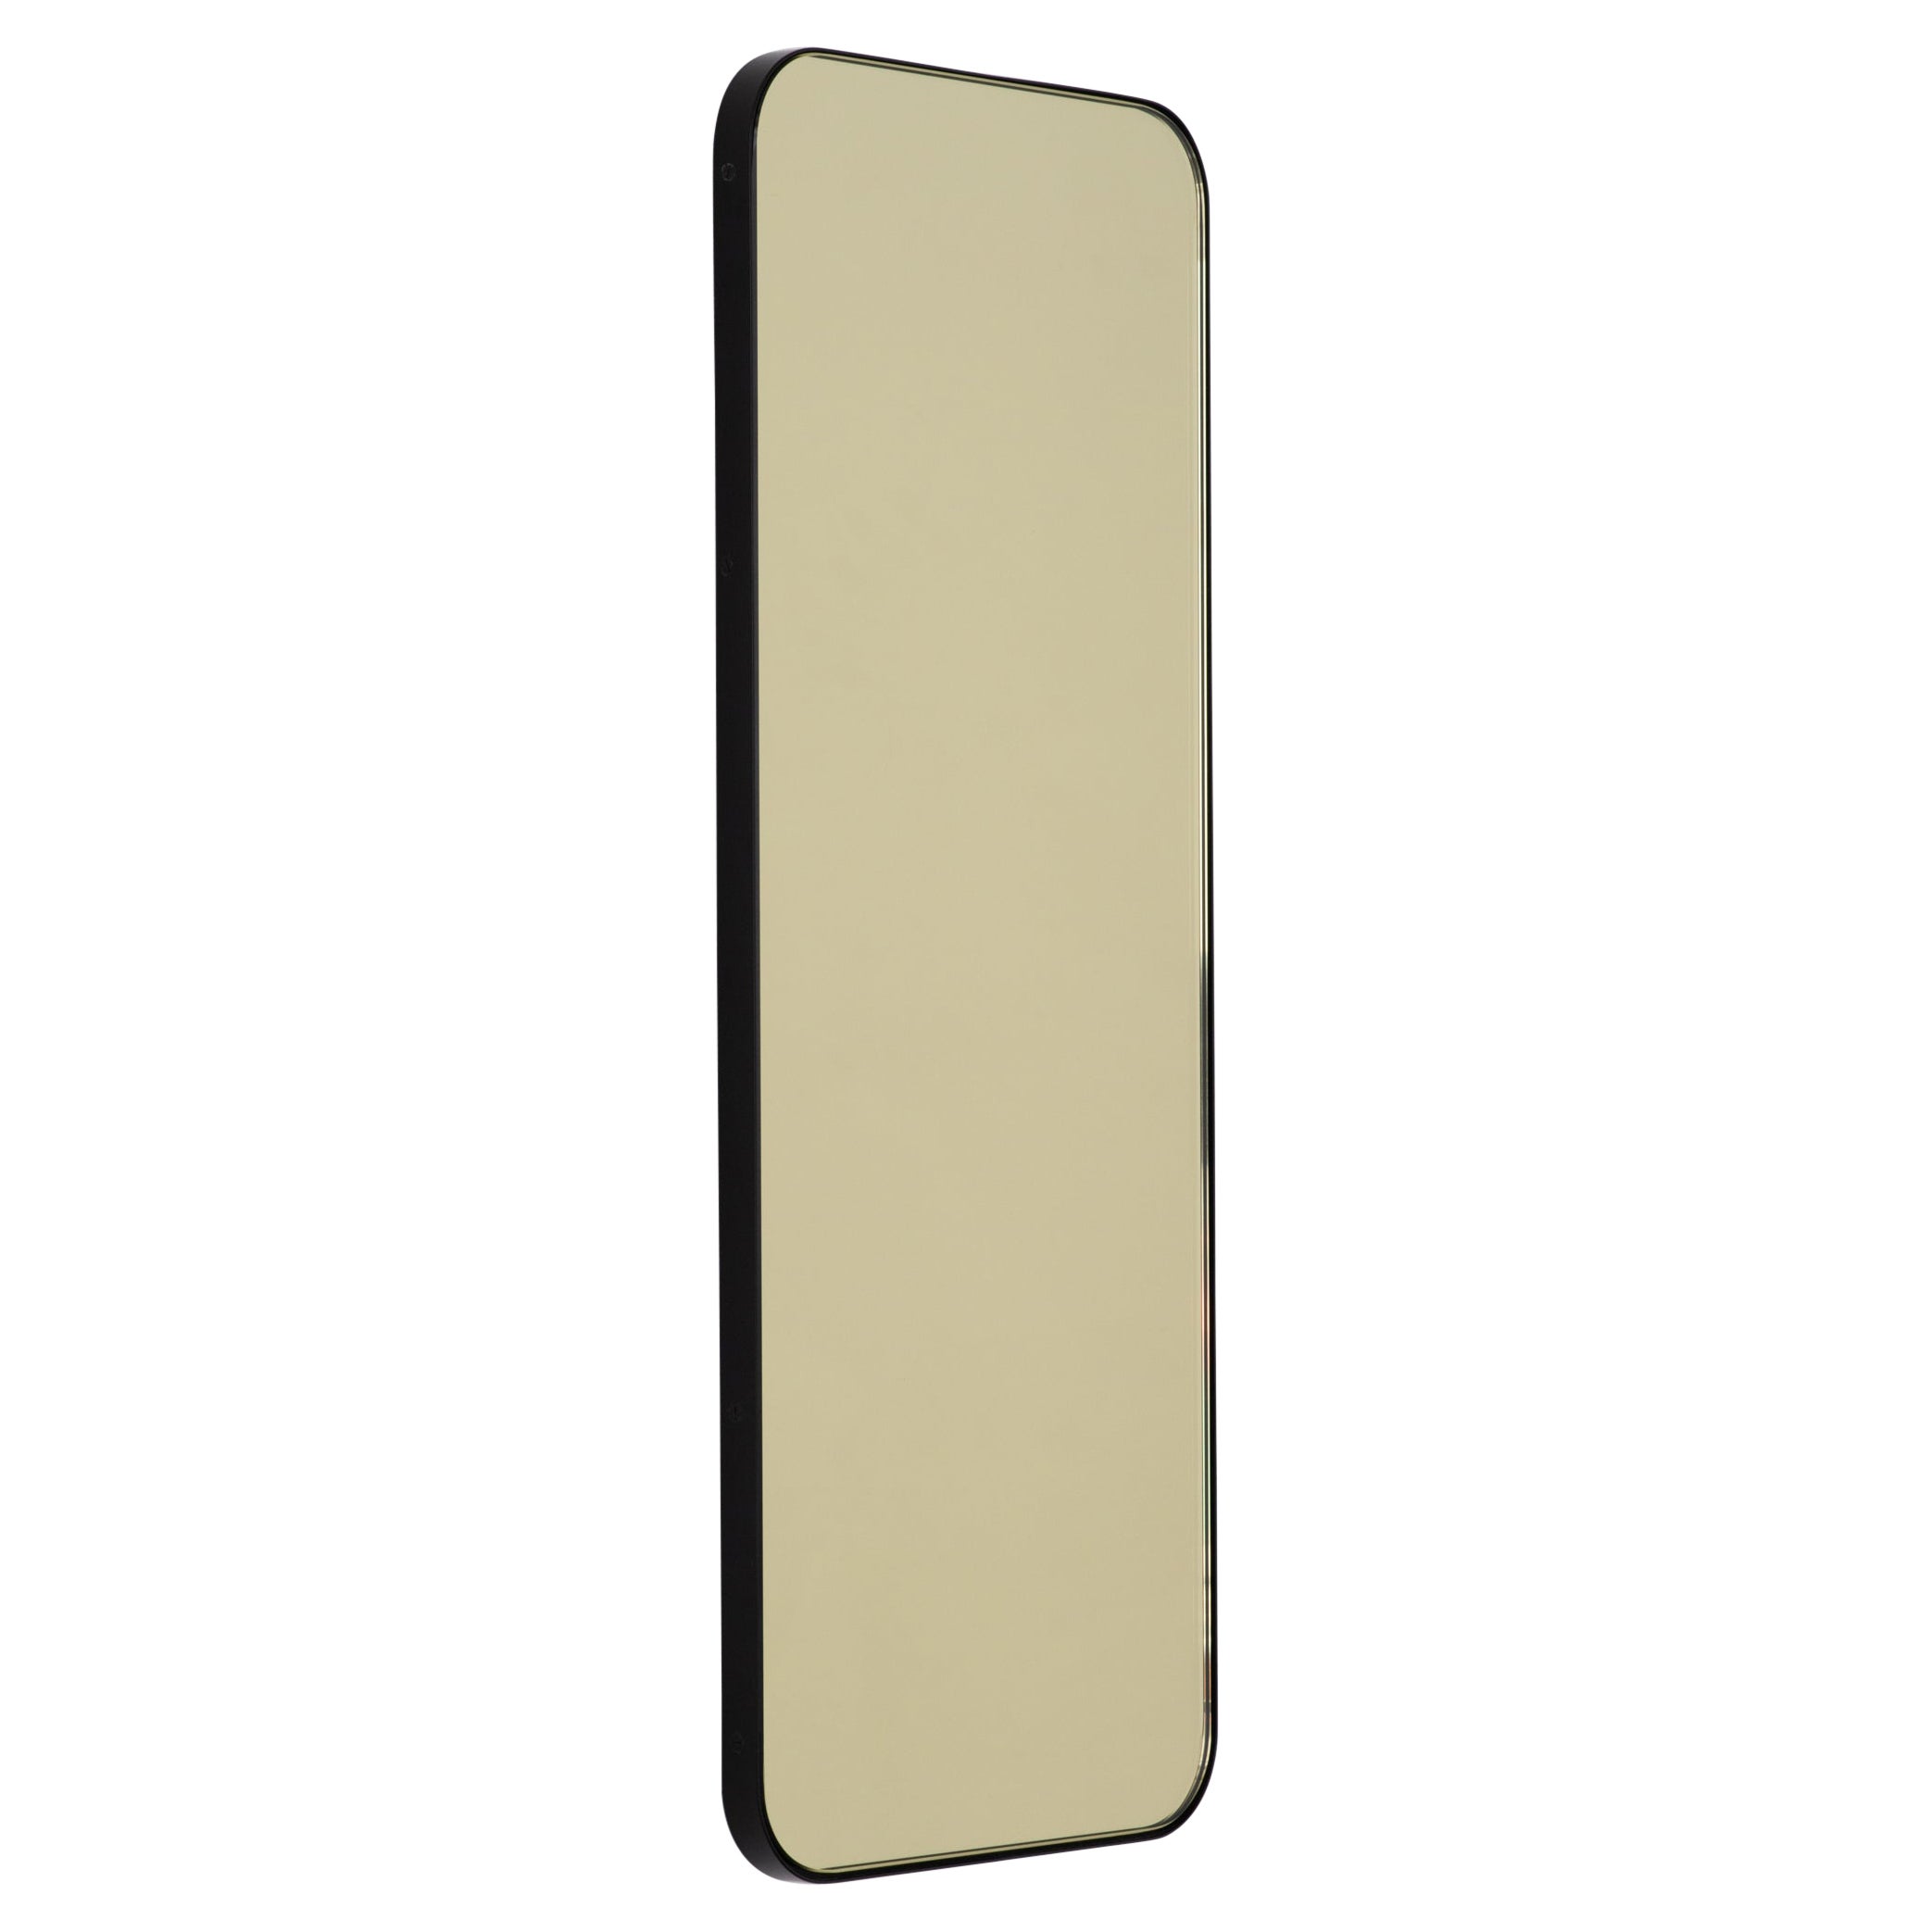 Quadris Gold Tinted Rectangular Wall Mirror with a Black Frame, Medium